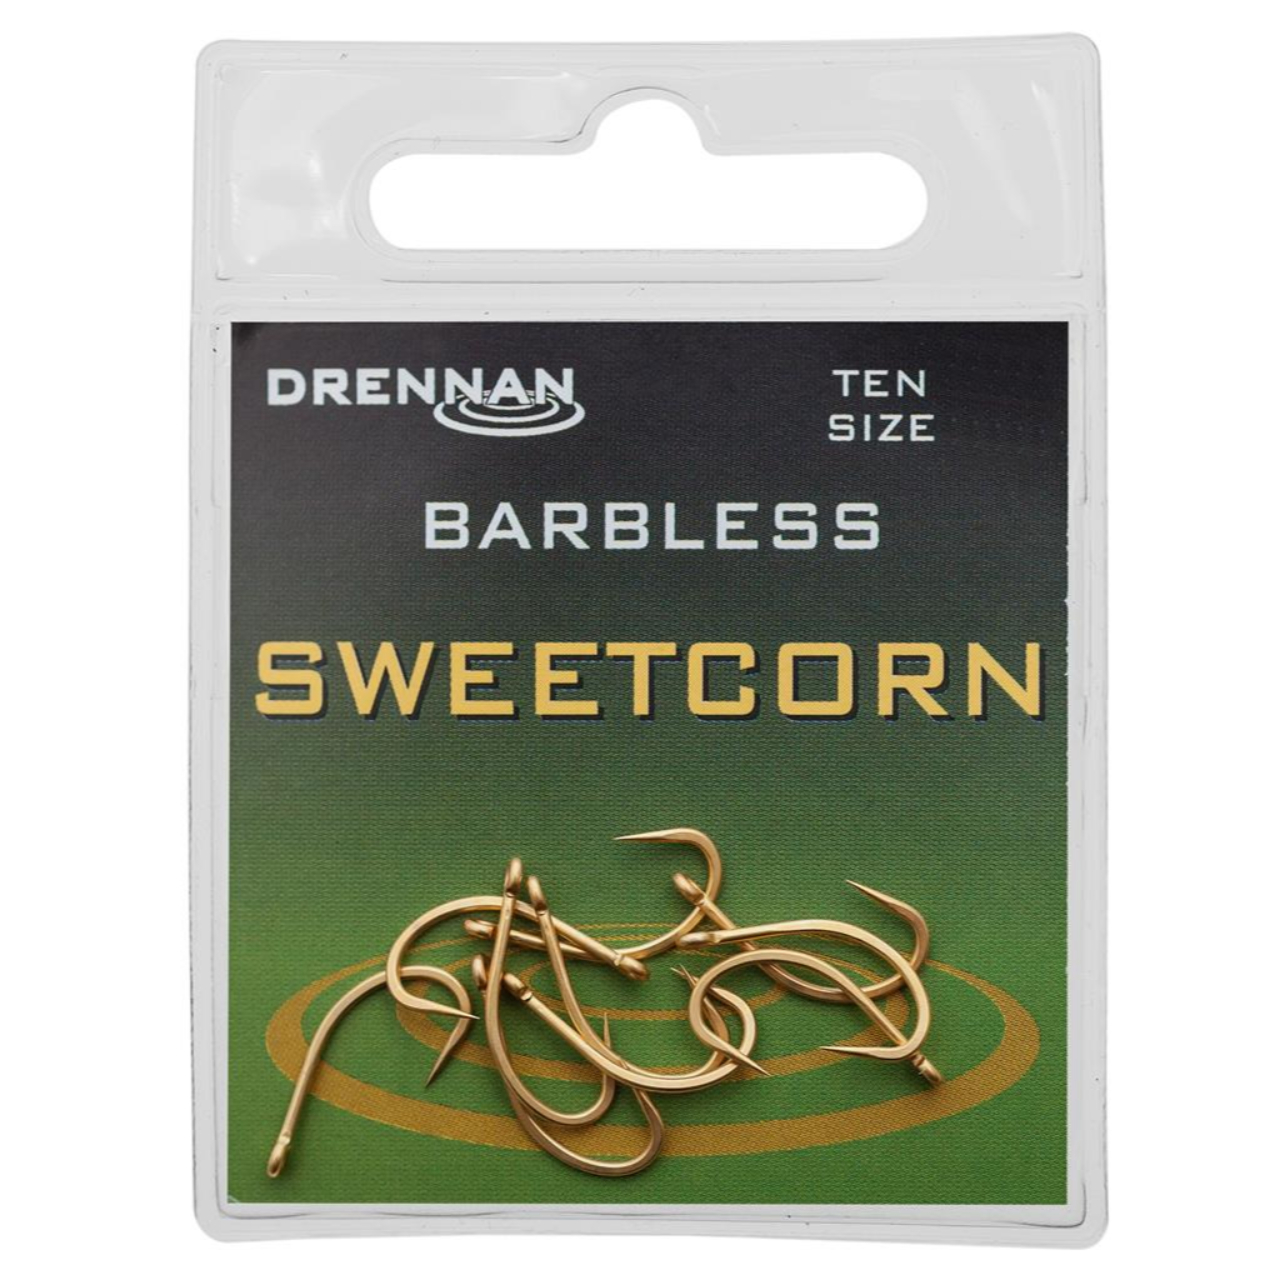 Drennan Sweetcorn Barbless HESCB006.jpg